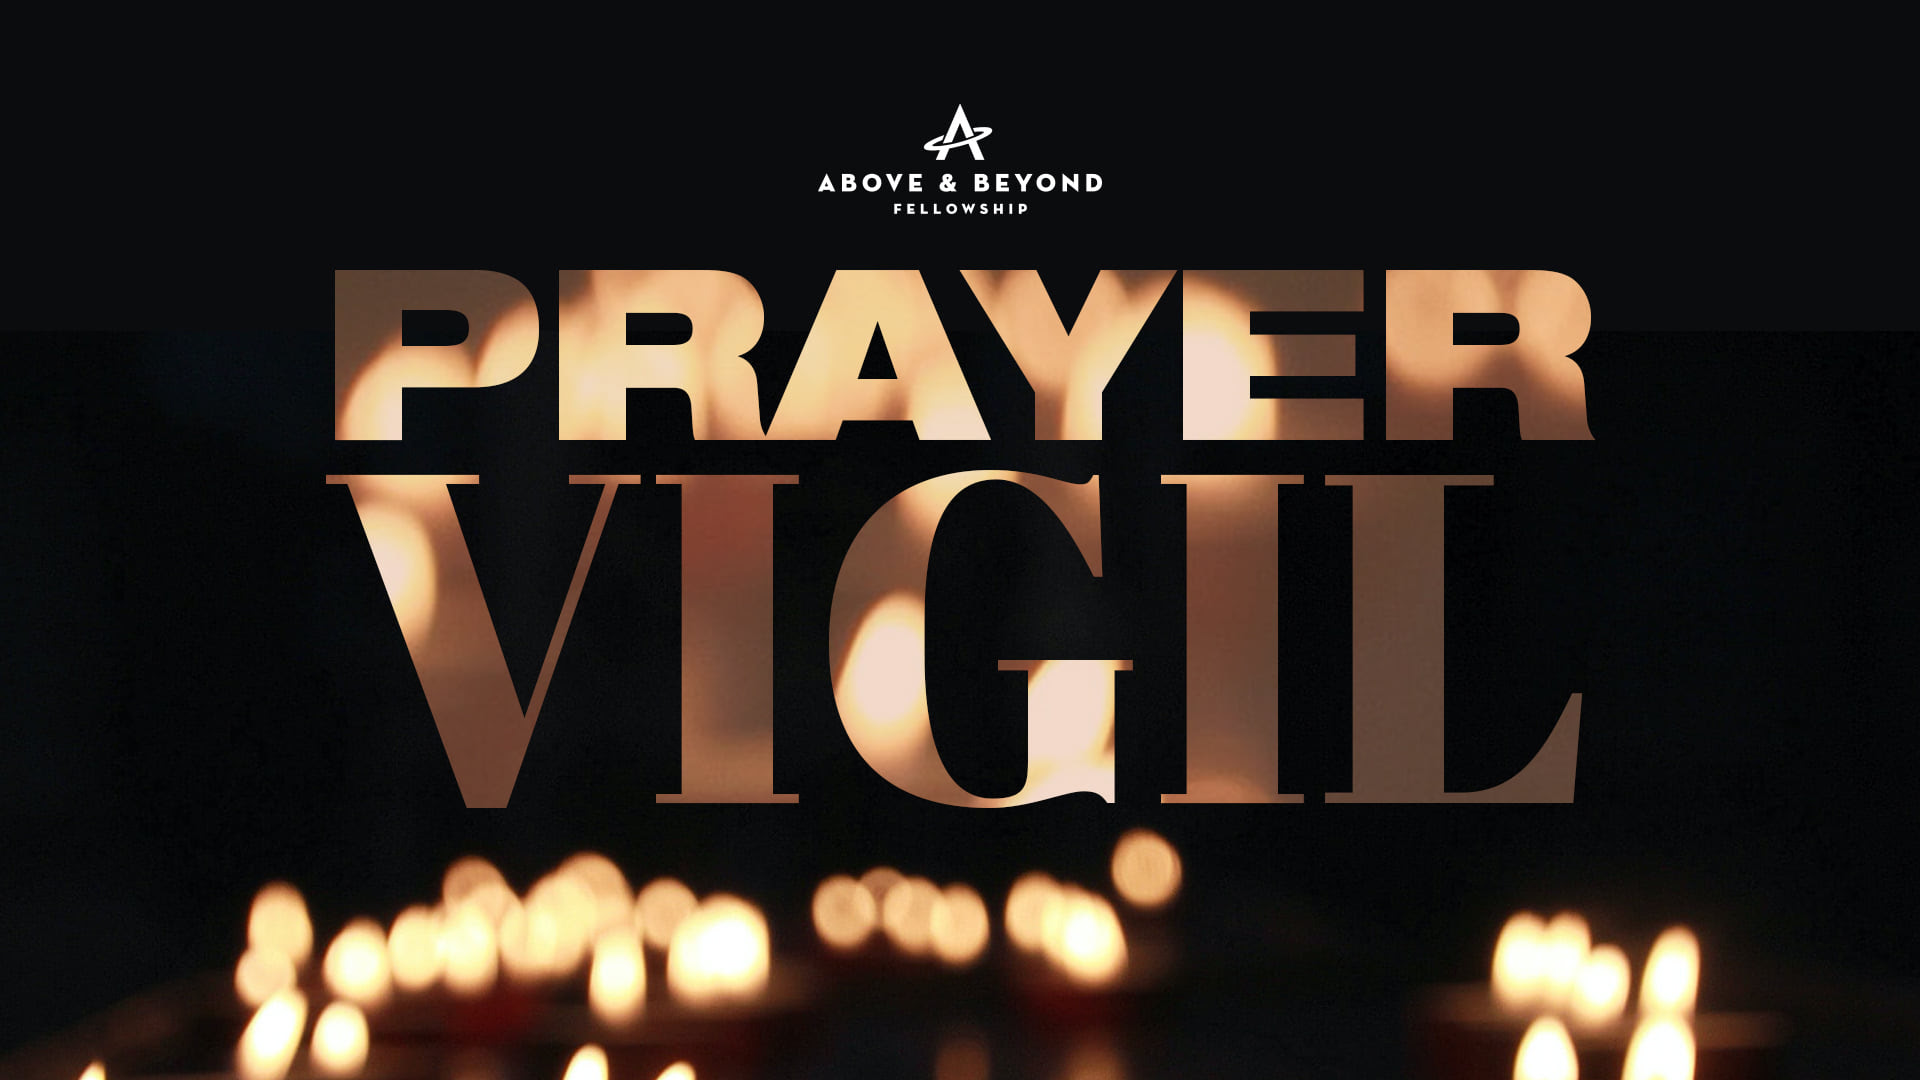 friday-night-prayer-vigil-april-16th-7-00pm-8-00pm-via-zoom-above